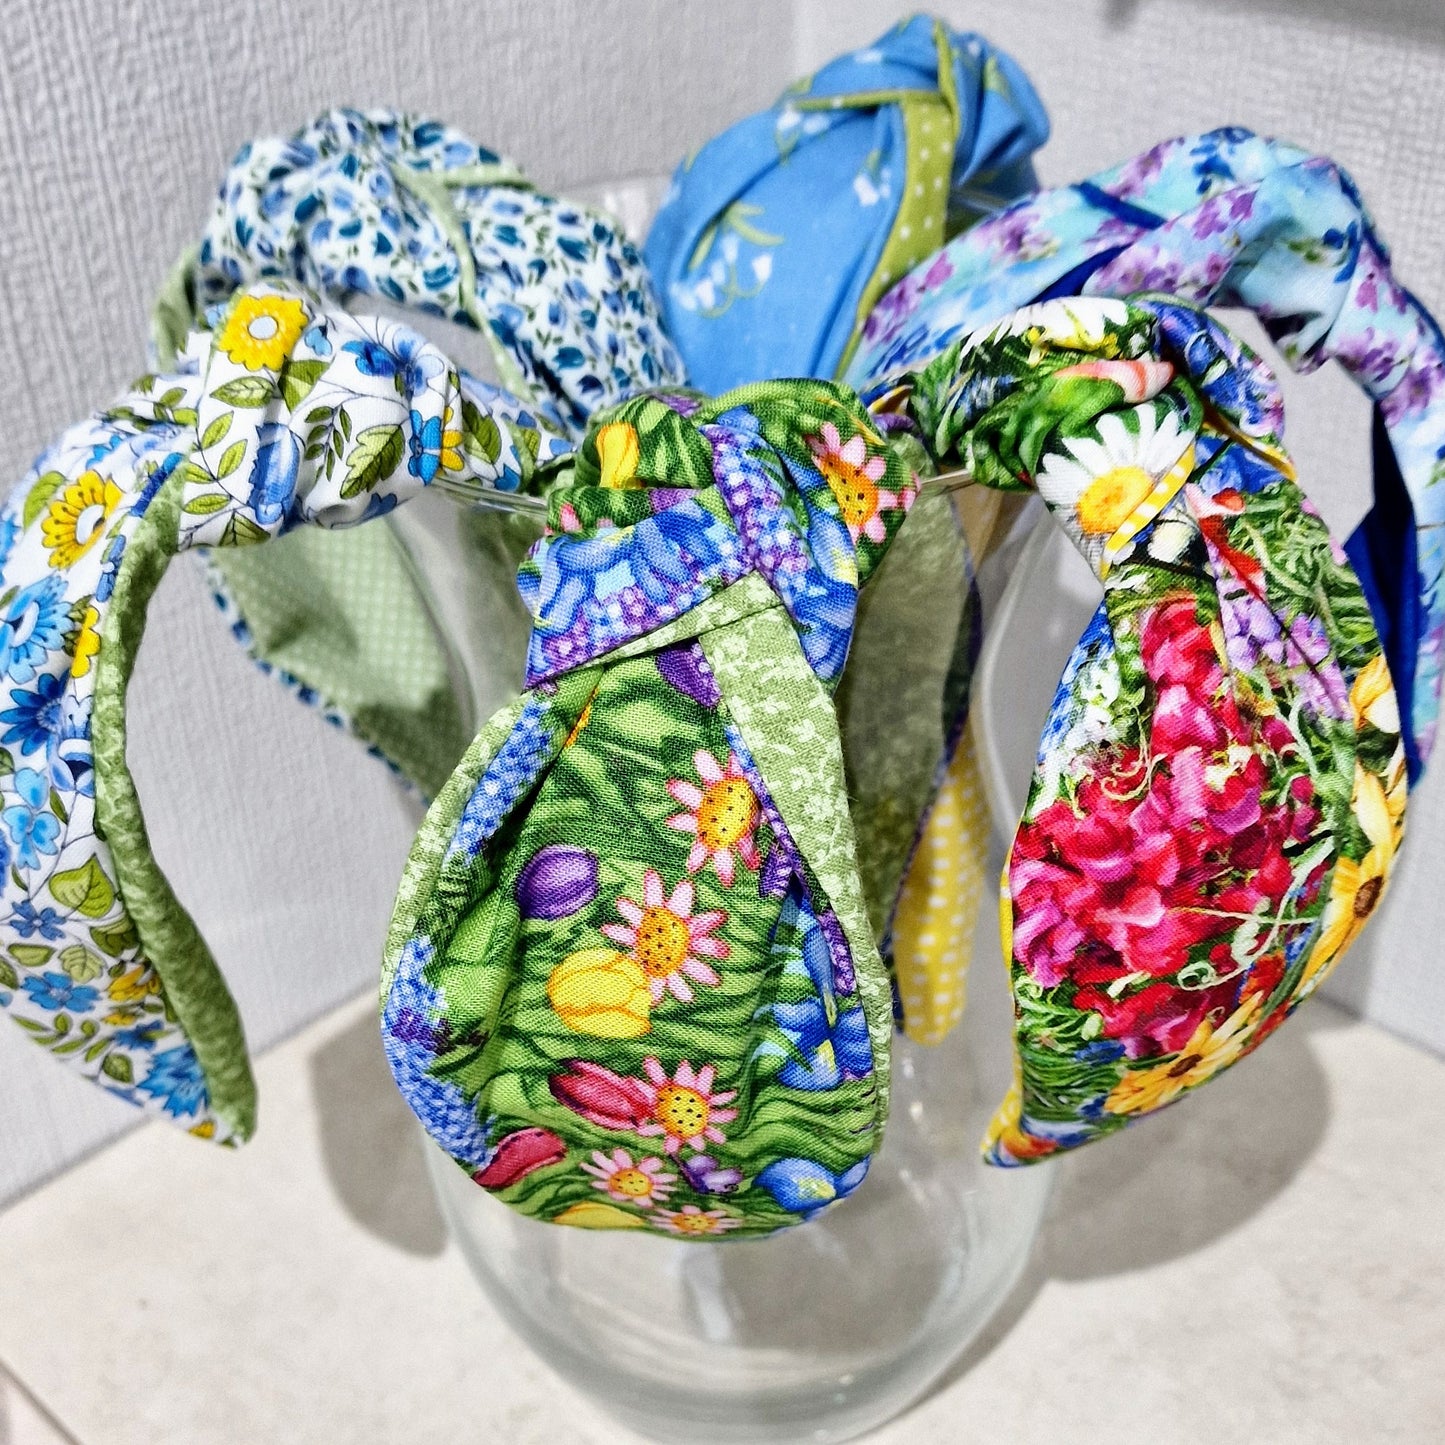 Spring Flowers Whitebells Bluebells Cotton Fabric Headband Hairband Knot Twist